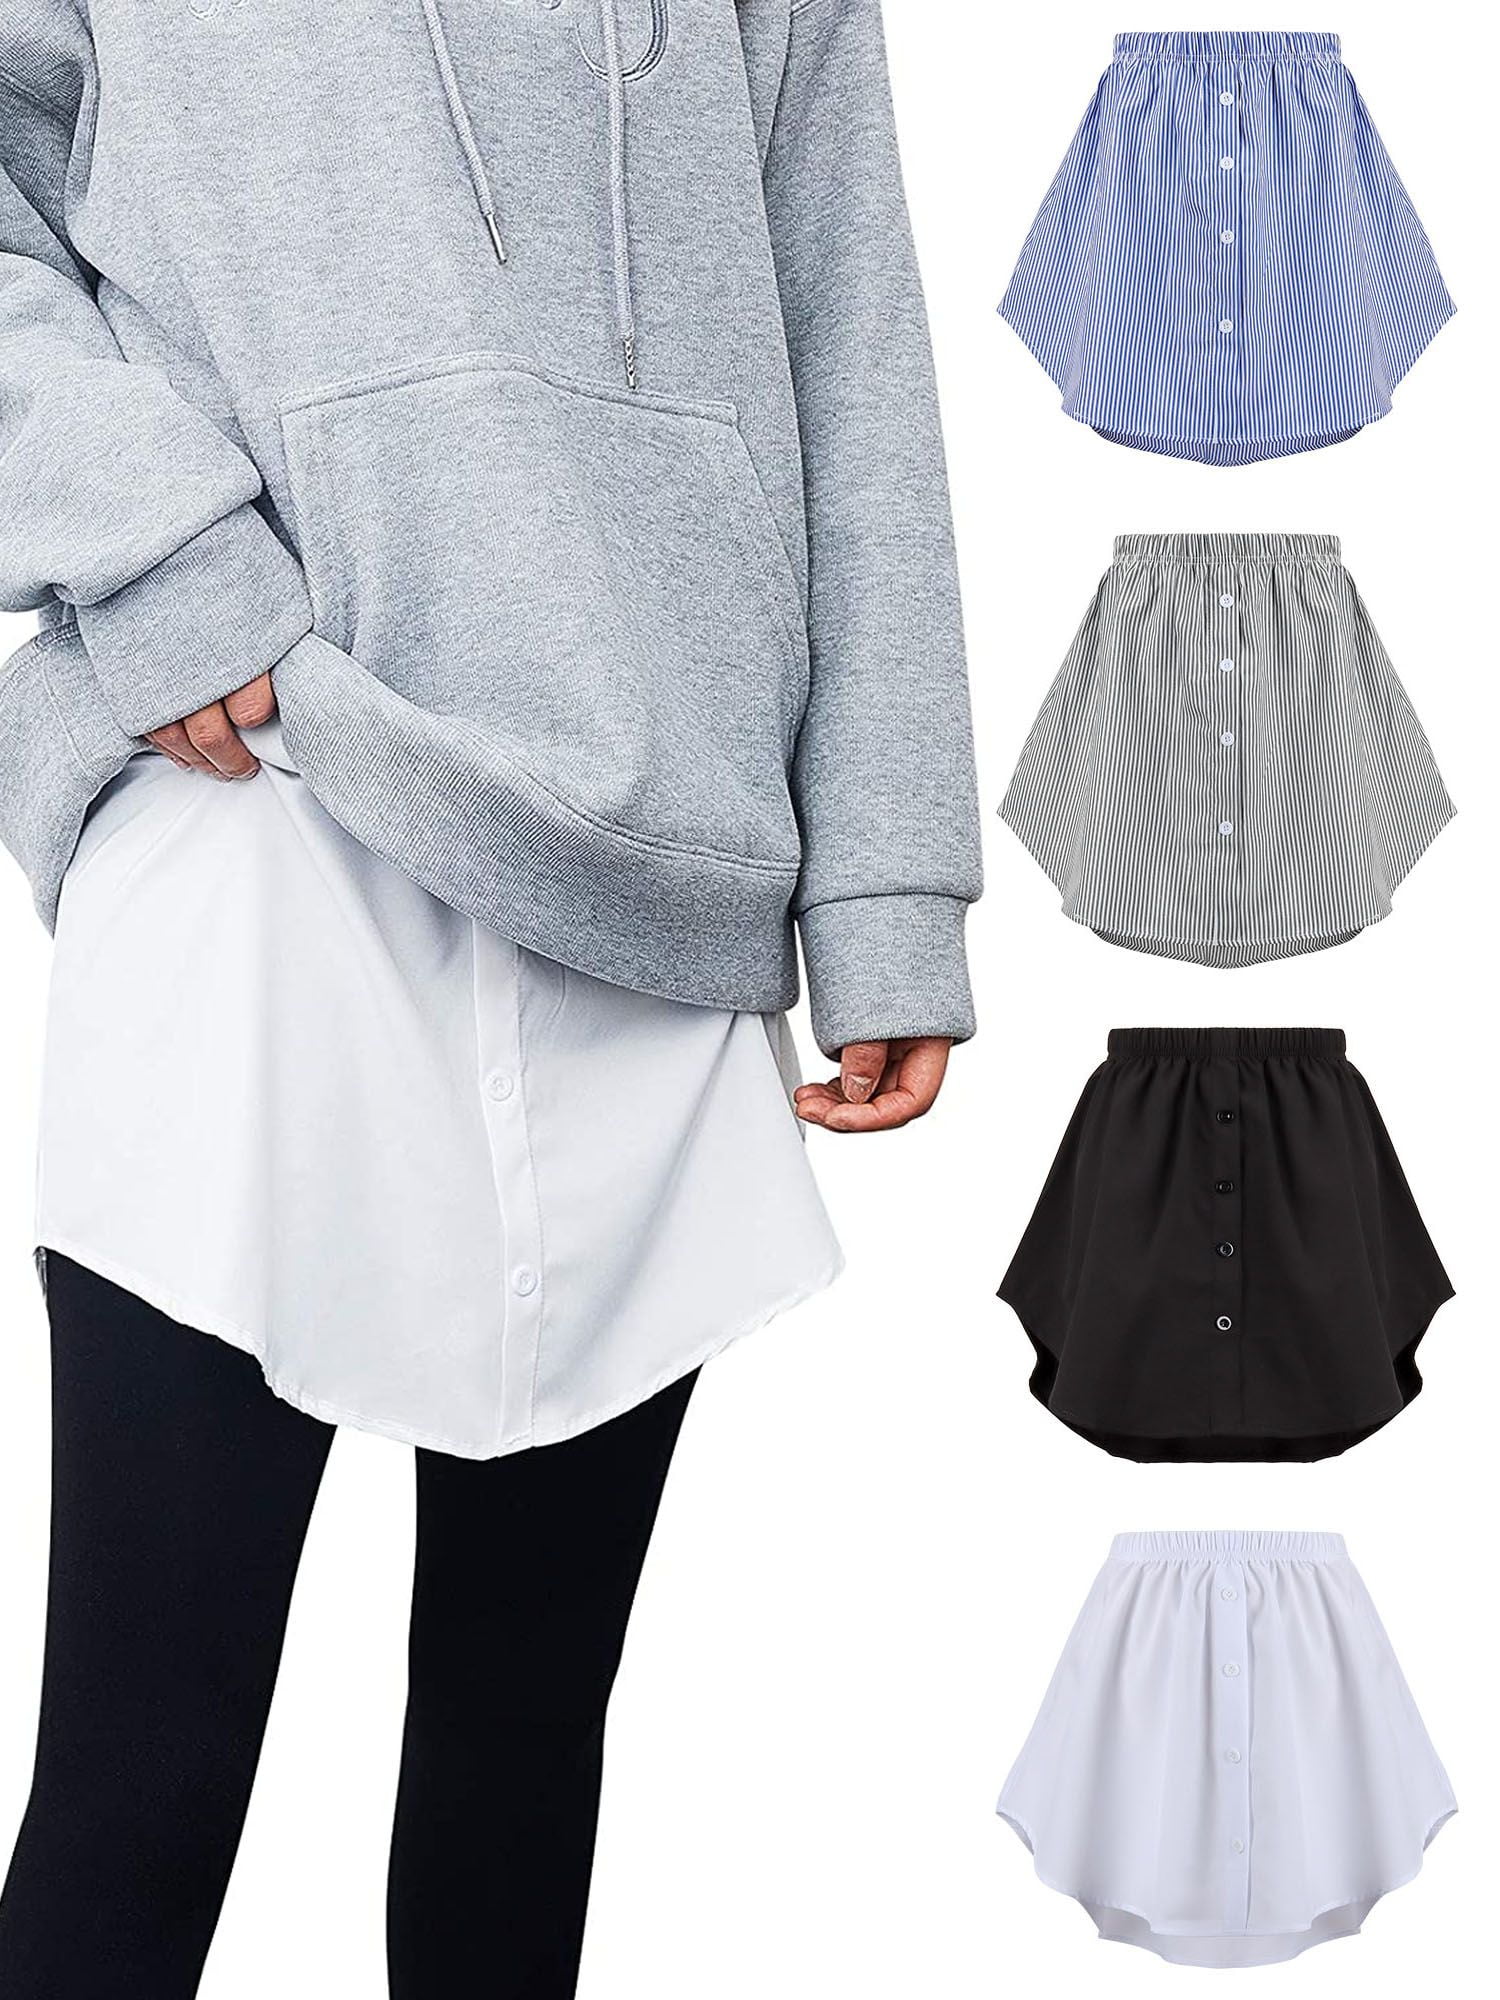 Deago 4 Pcs Shirt Extender for Women Adjustable Layering Fake Top Lower  Sweep Shirt Half Length Mini Skirt (Multicolor, XL) 